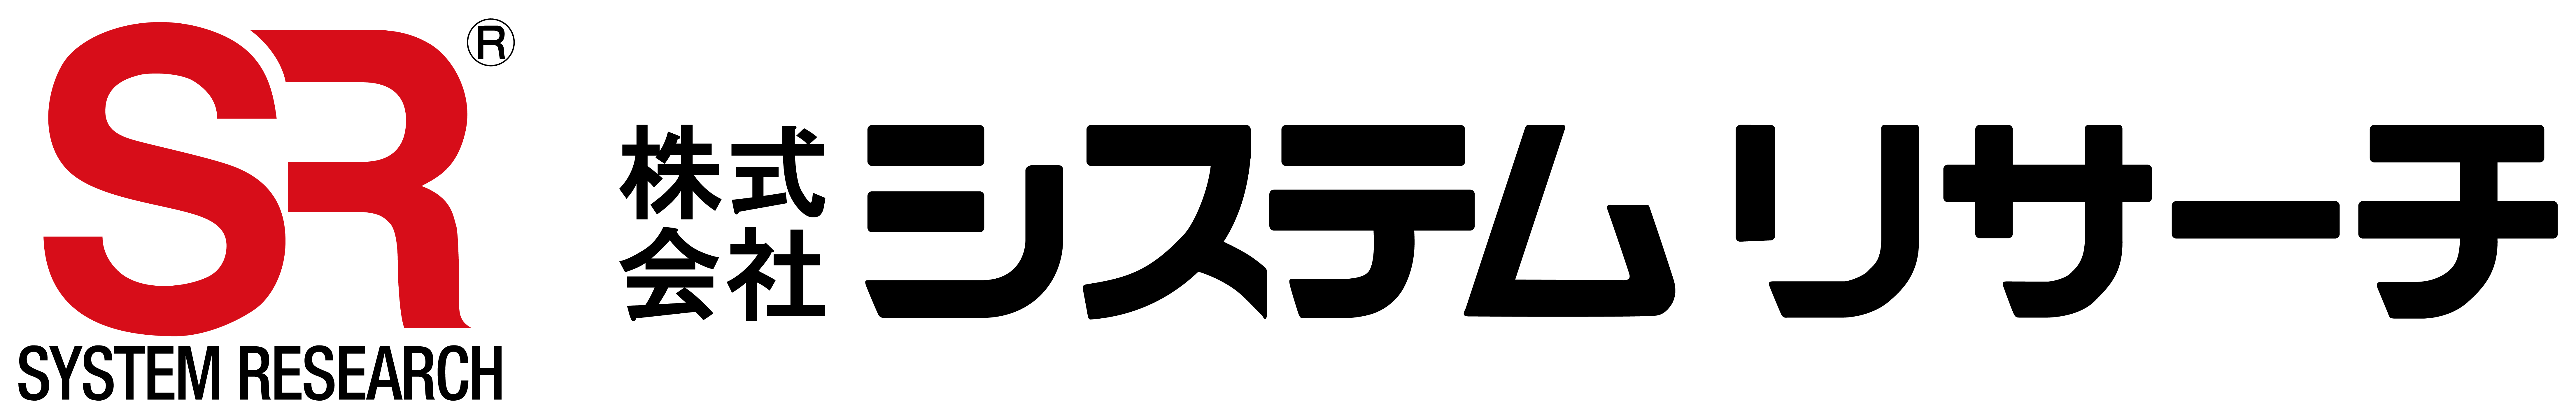 Logotipo de System Research